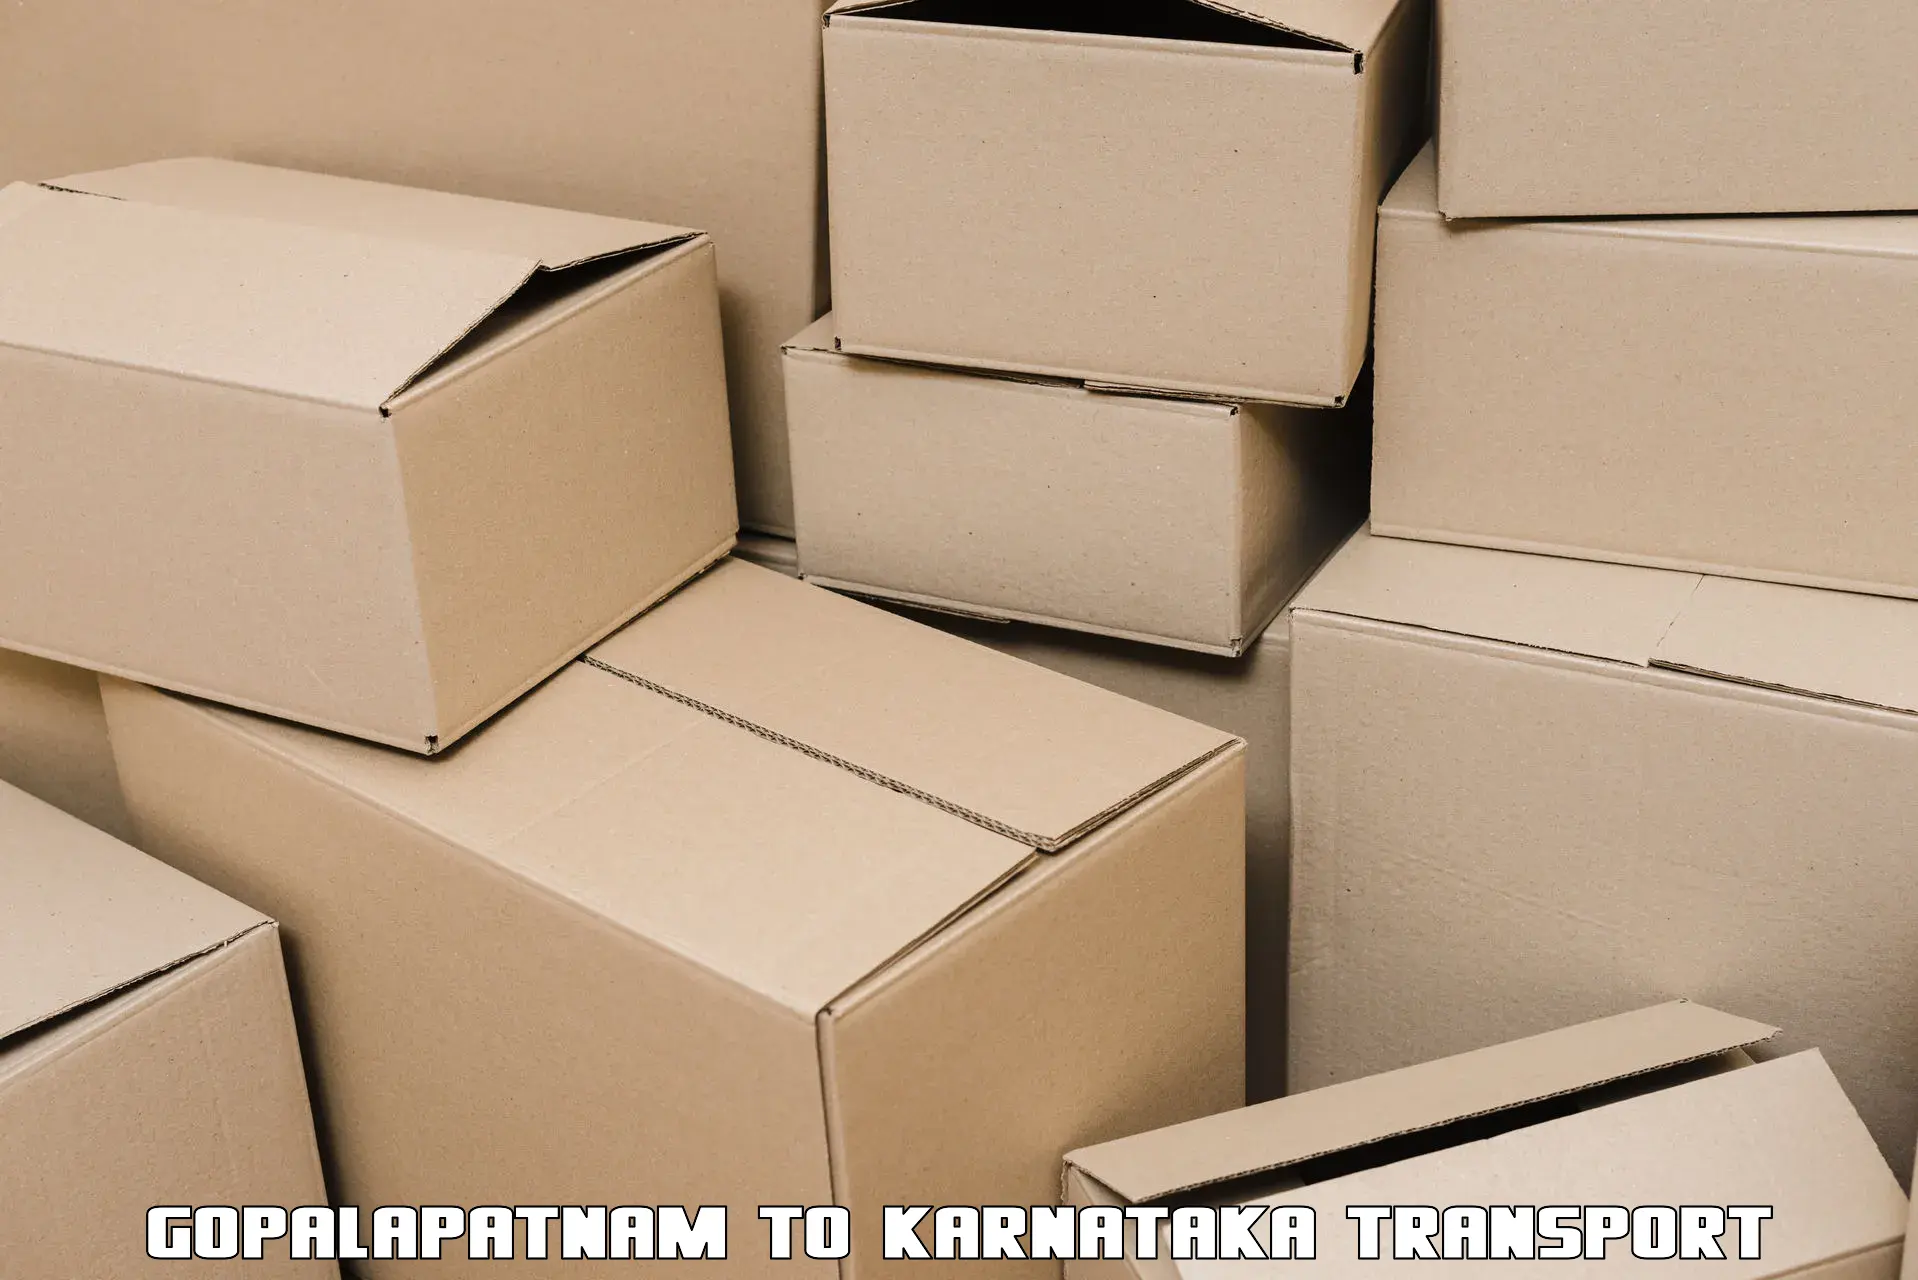 Vehicle parcel service Gopalapatnam to Karnataka